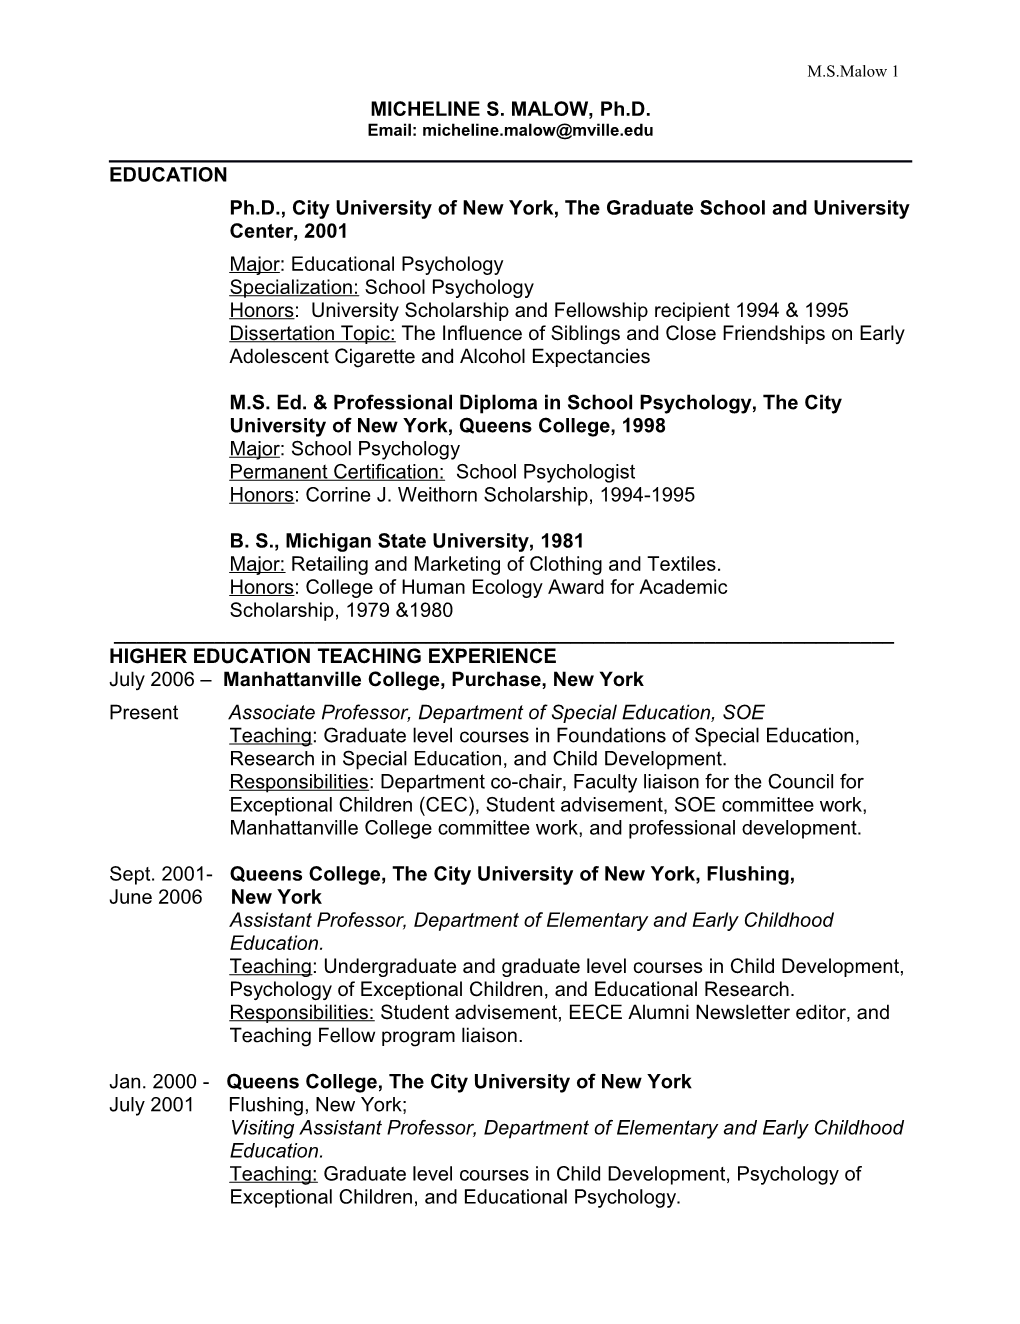 Ph.D., City University of New York, the Graduate School and University Center, 2001